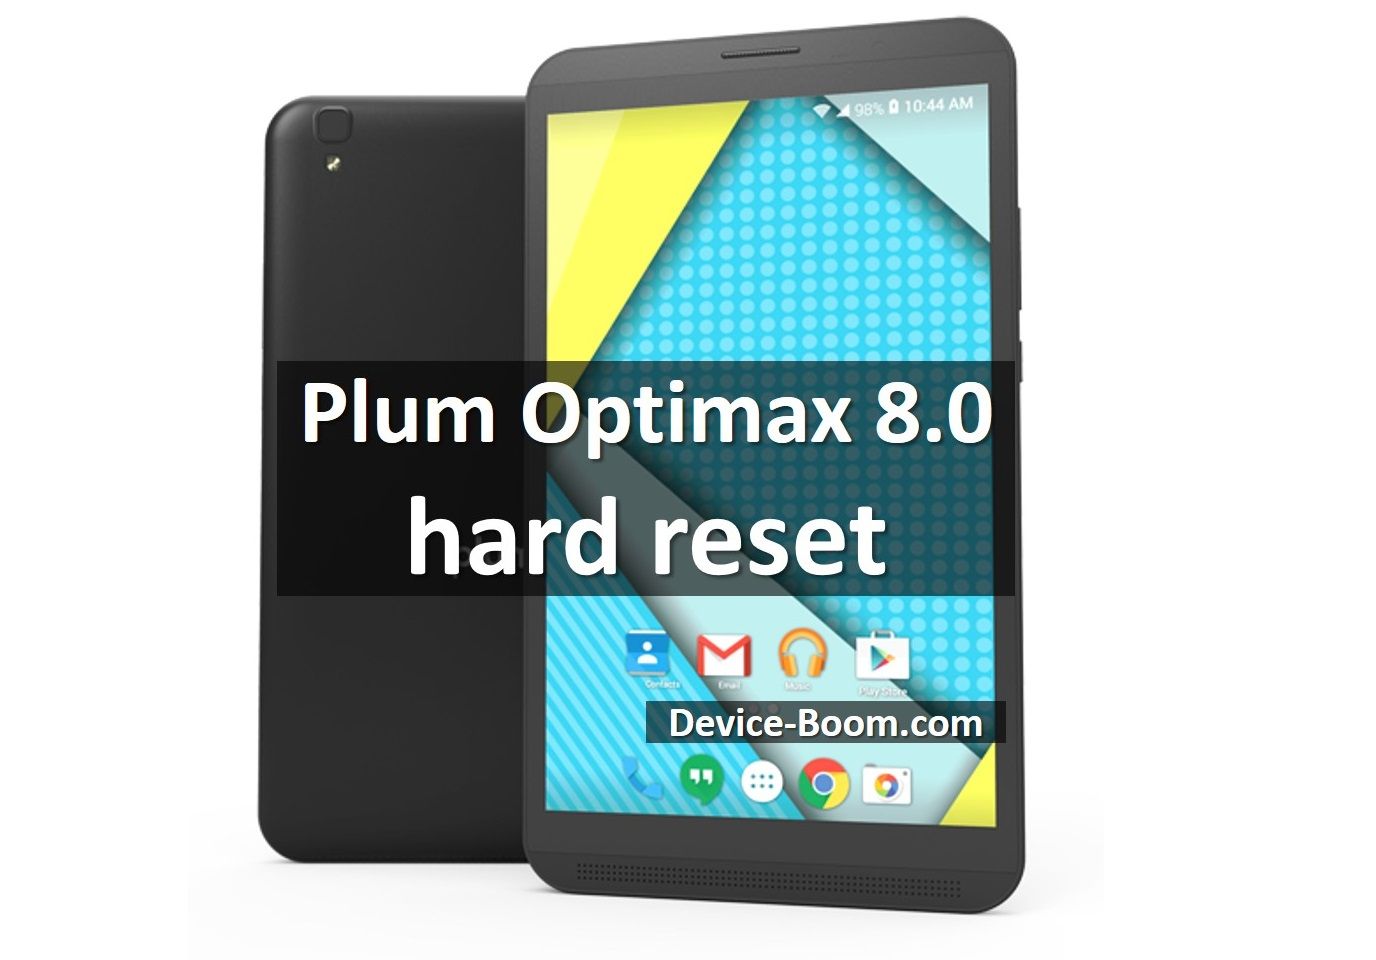 Plum Optimax 8.0 hard reset